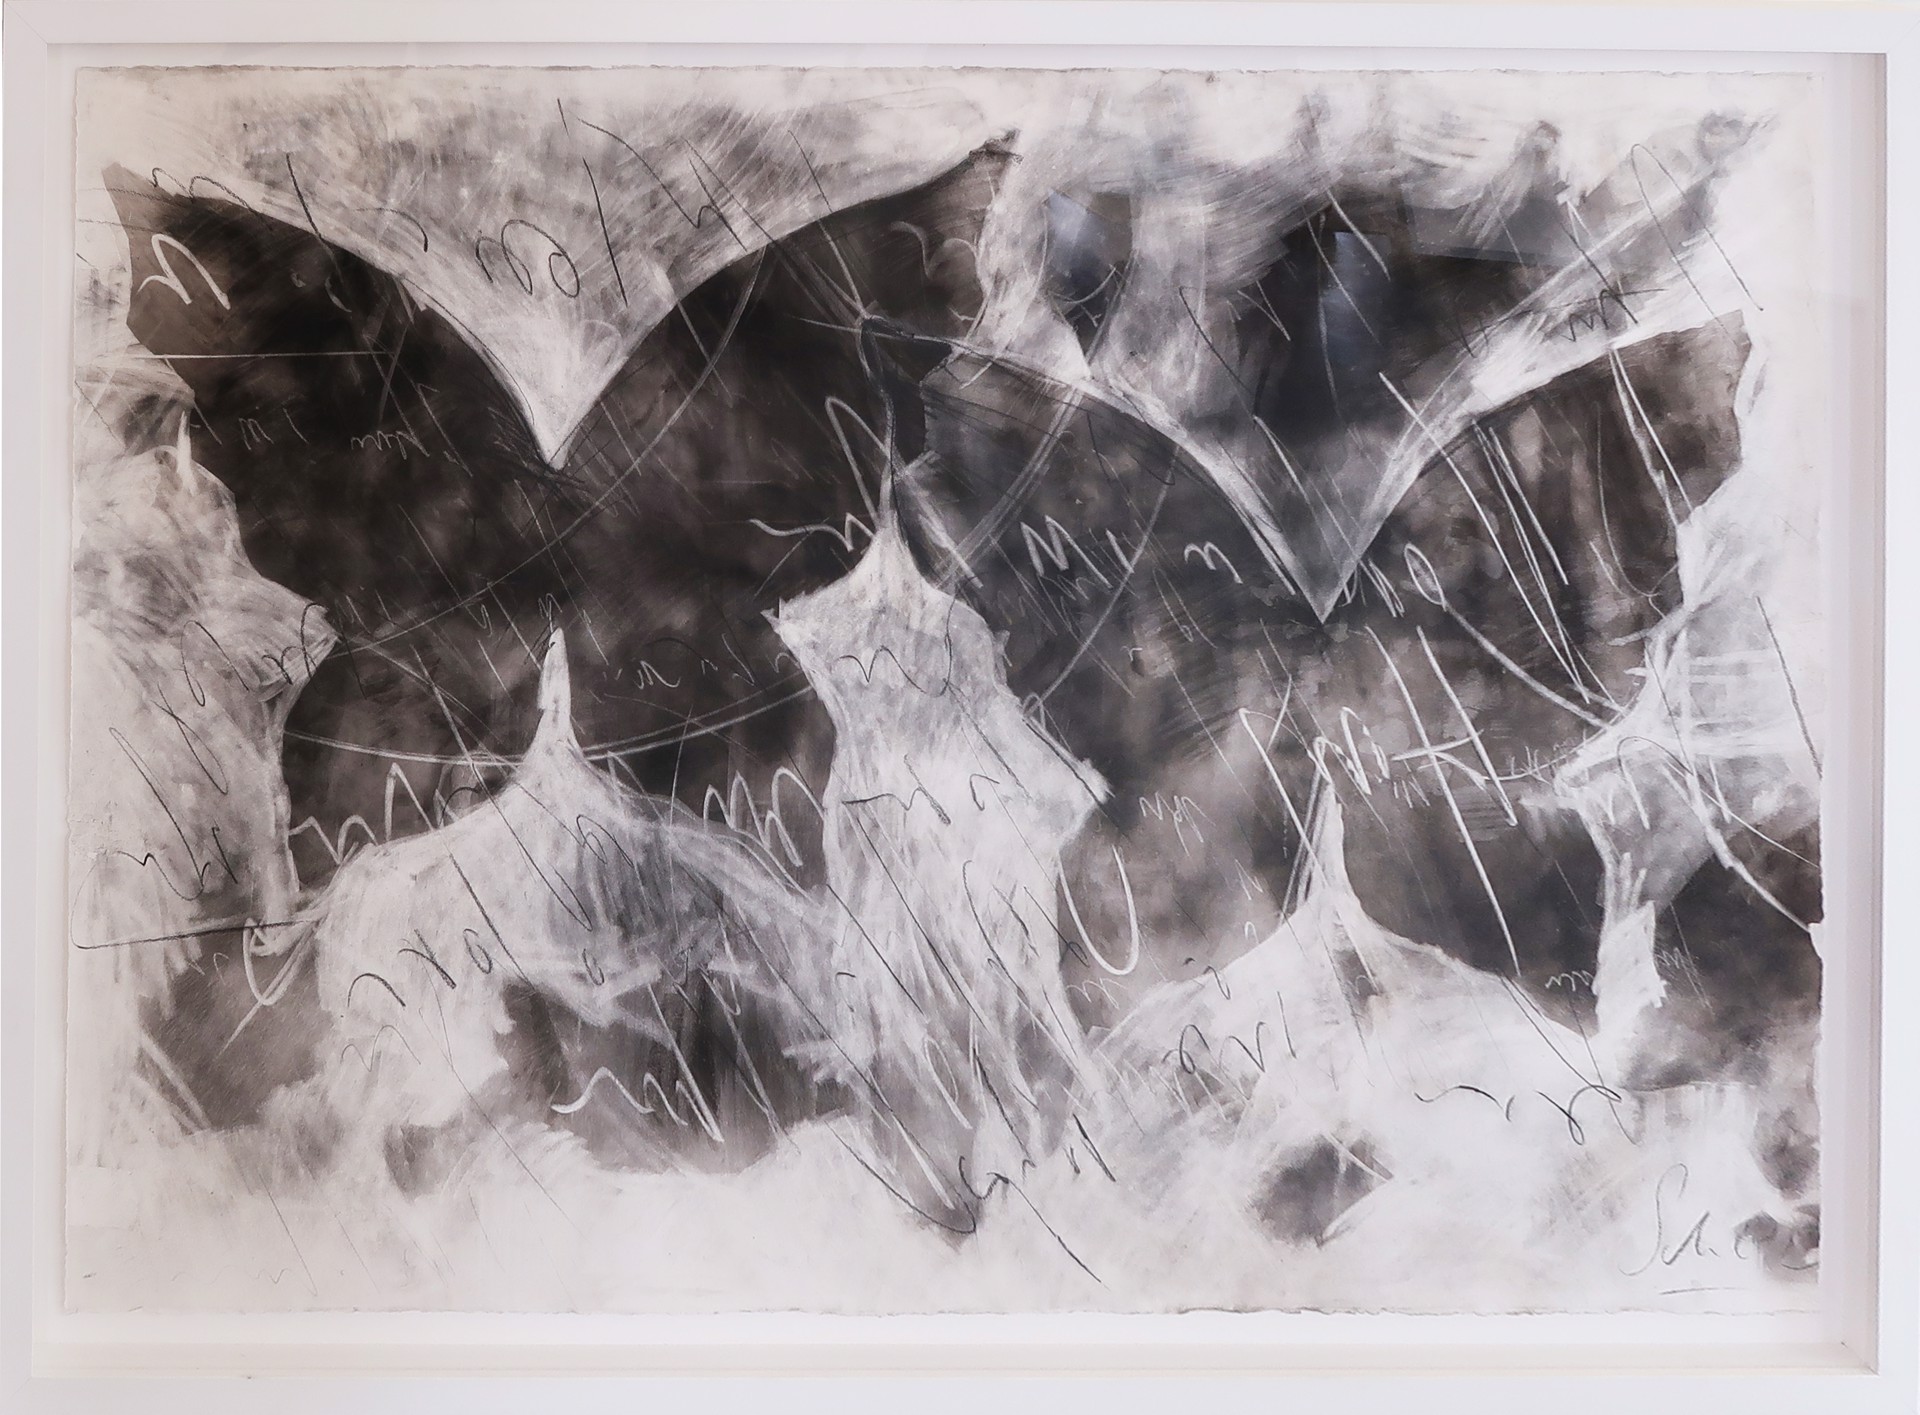 Smoke and Butterflies by Karoline Schleh